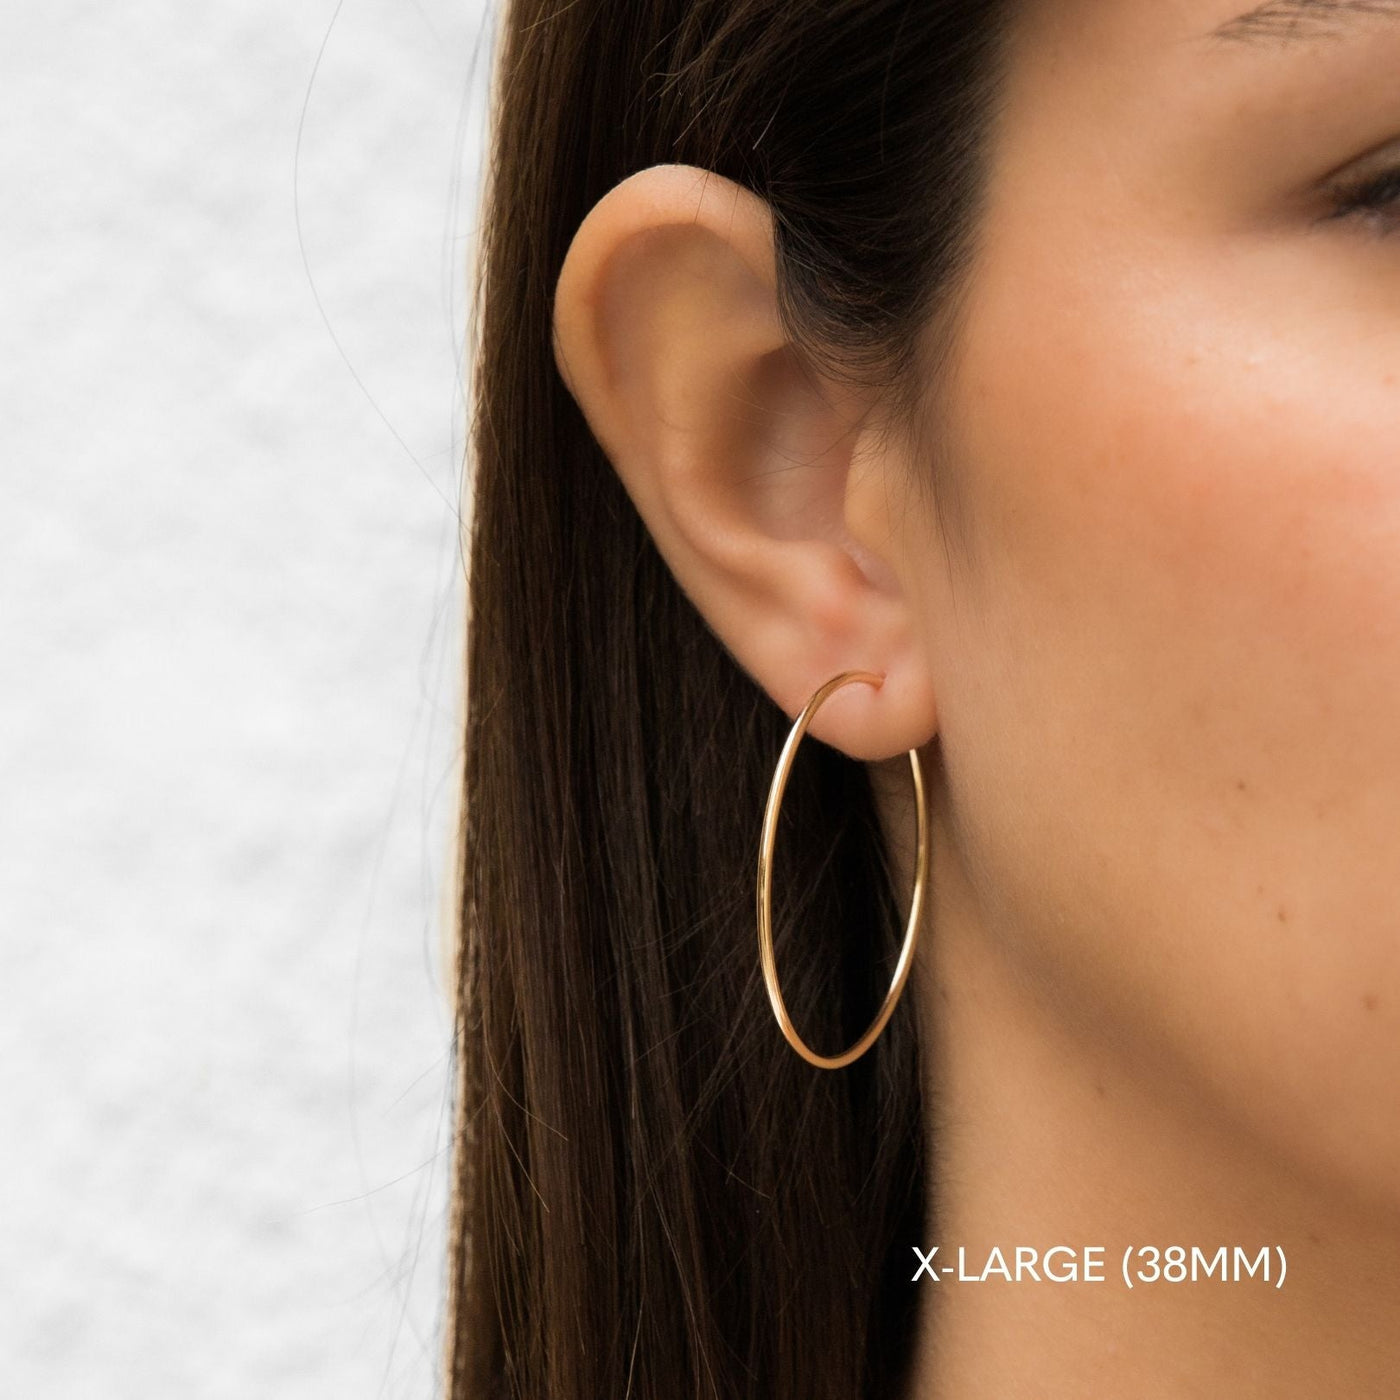 Thin Hoop Earrings | Simple & Dainty Jewelry